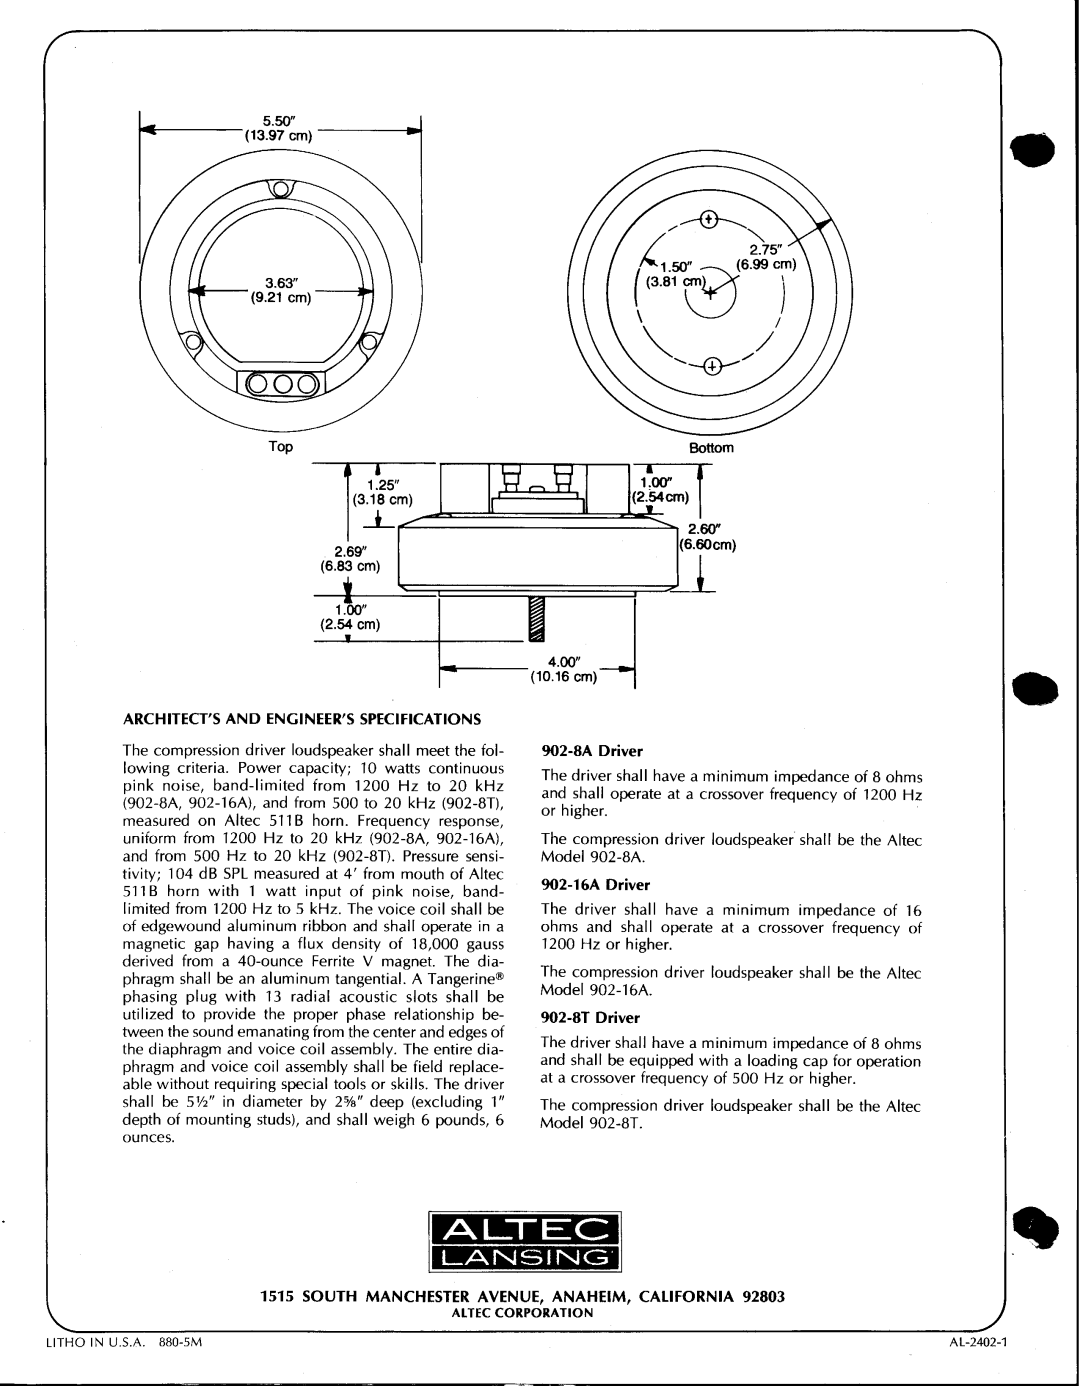 Altec Lansing 902-8T, 902-8A, 902-16A manual 